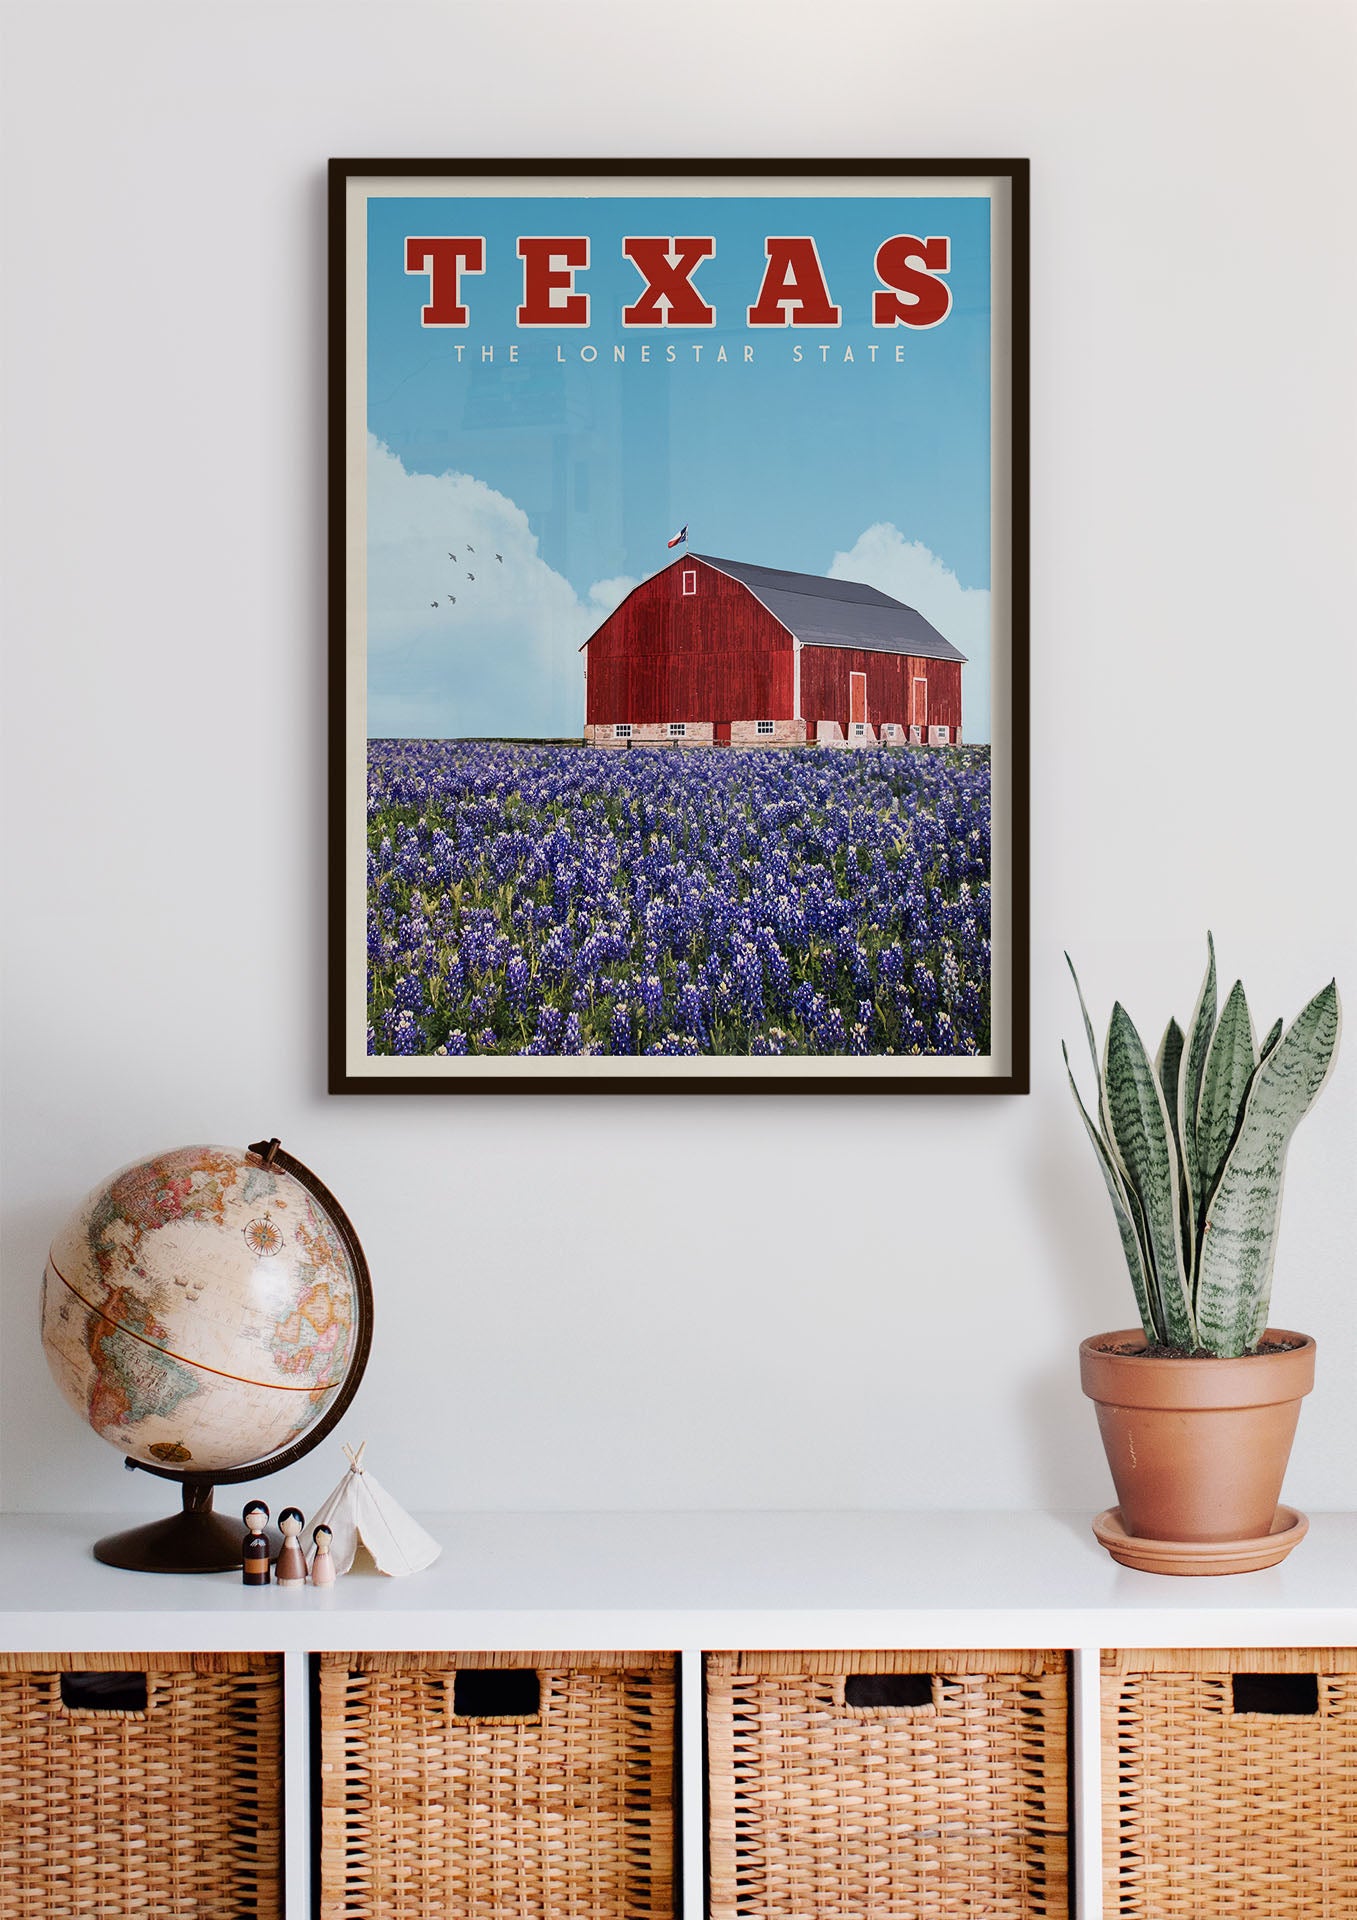 Texas - Vintage Travel Poster